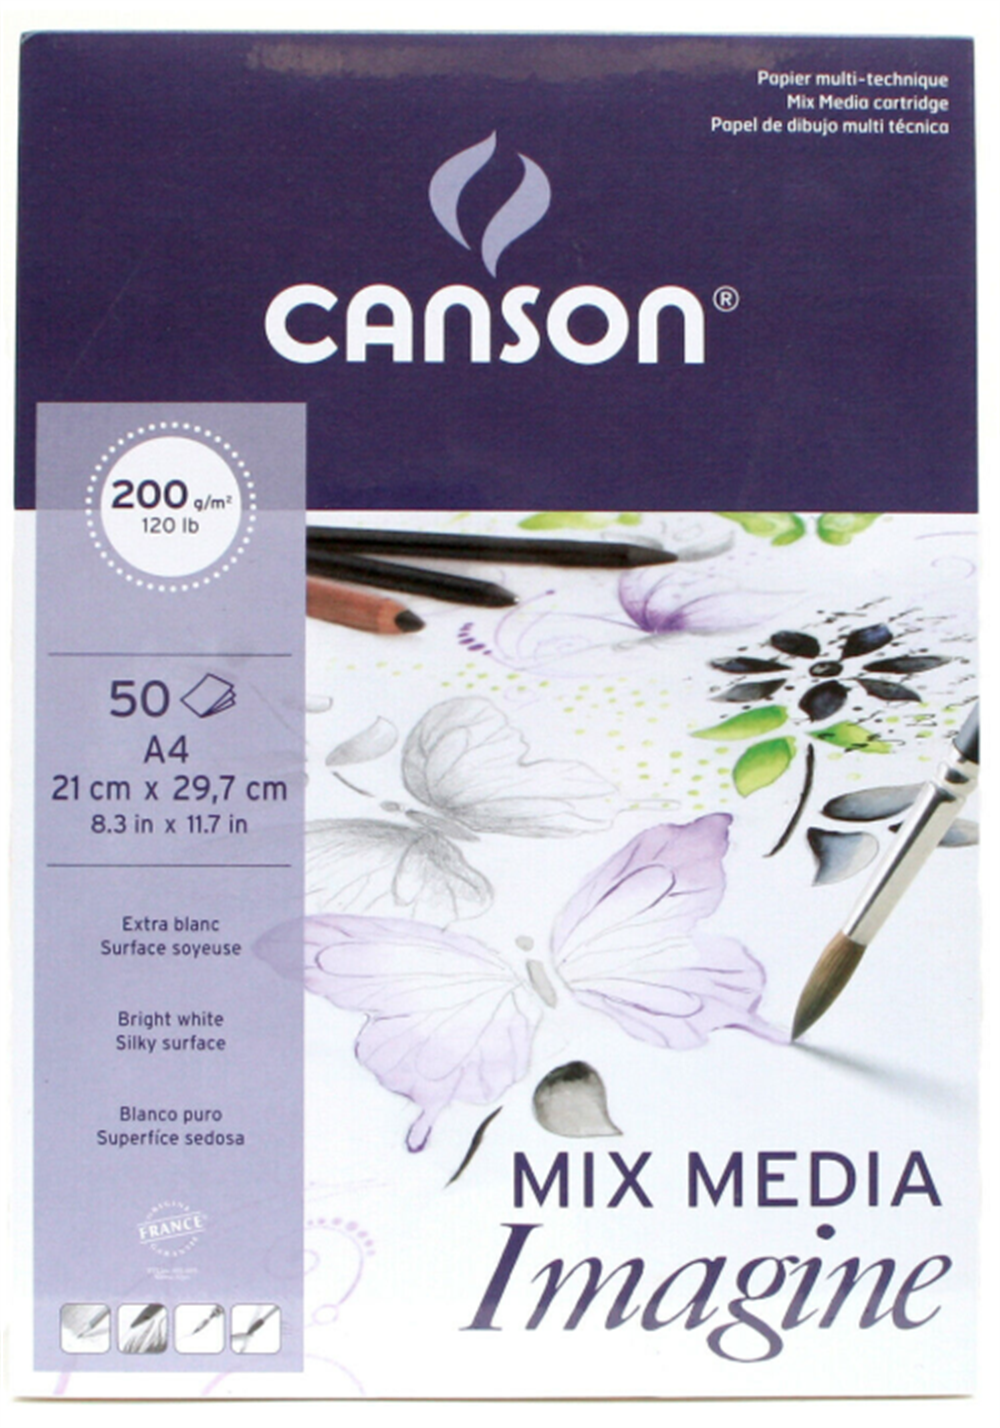 Canson Mix Media İmagine Sulu Boya Defteri 200 gr A4 50 Yaprak